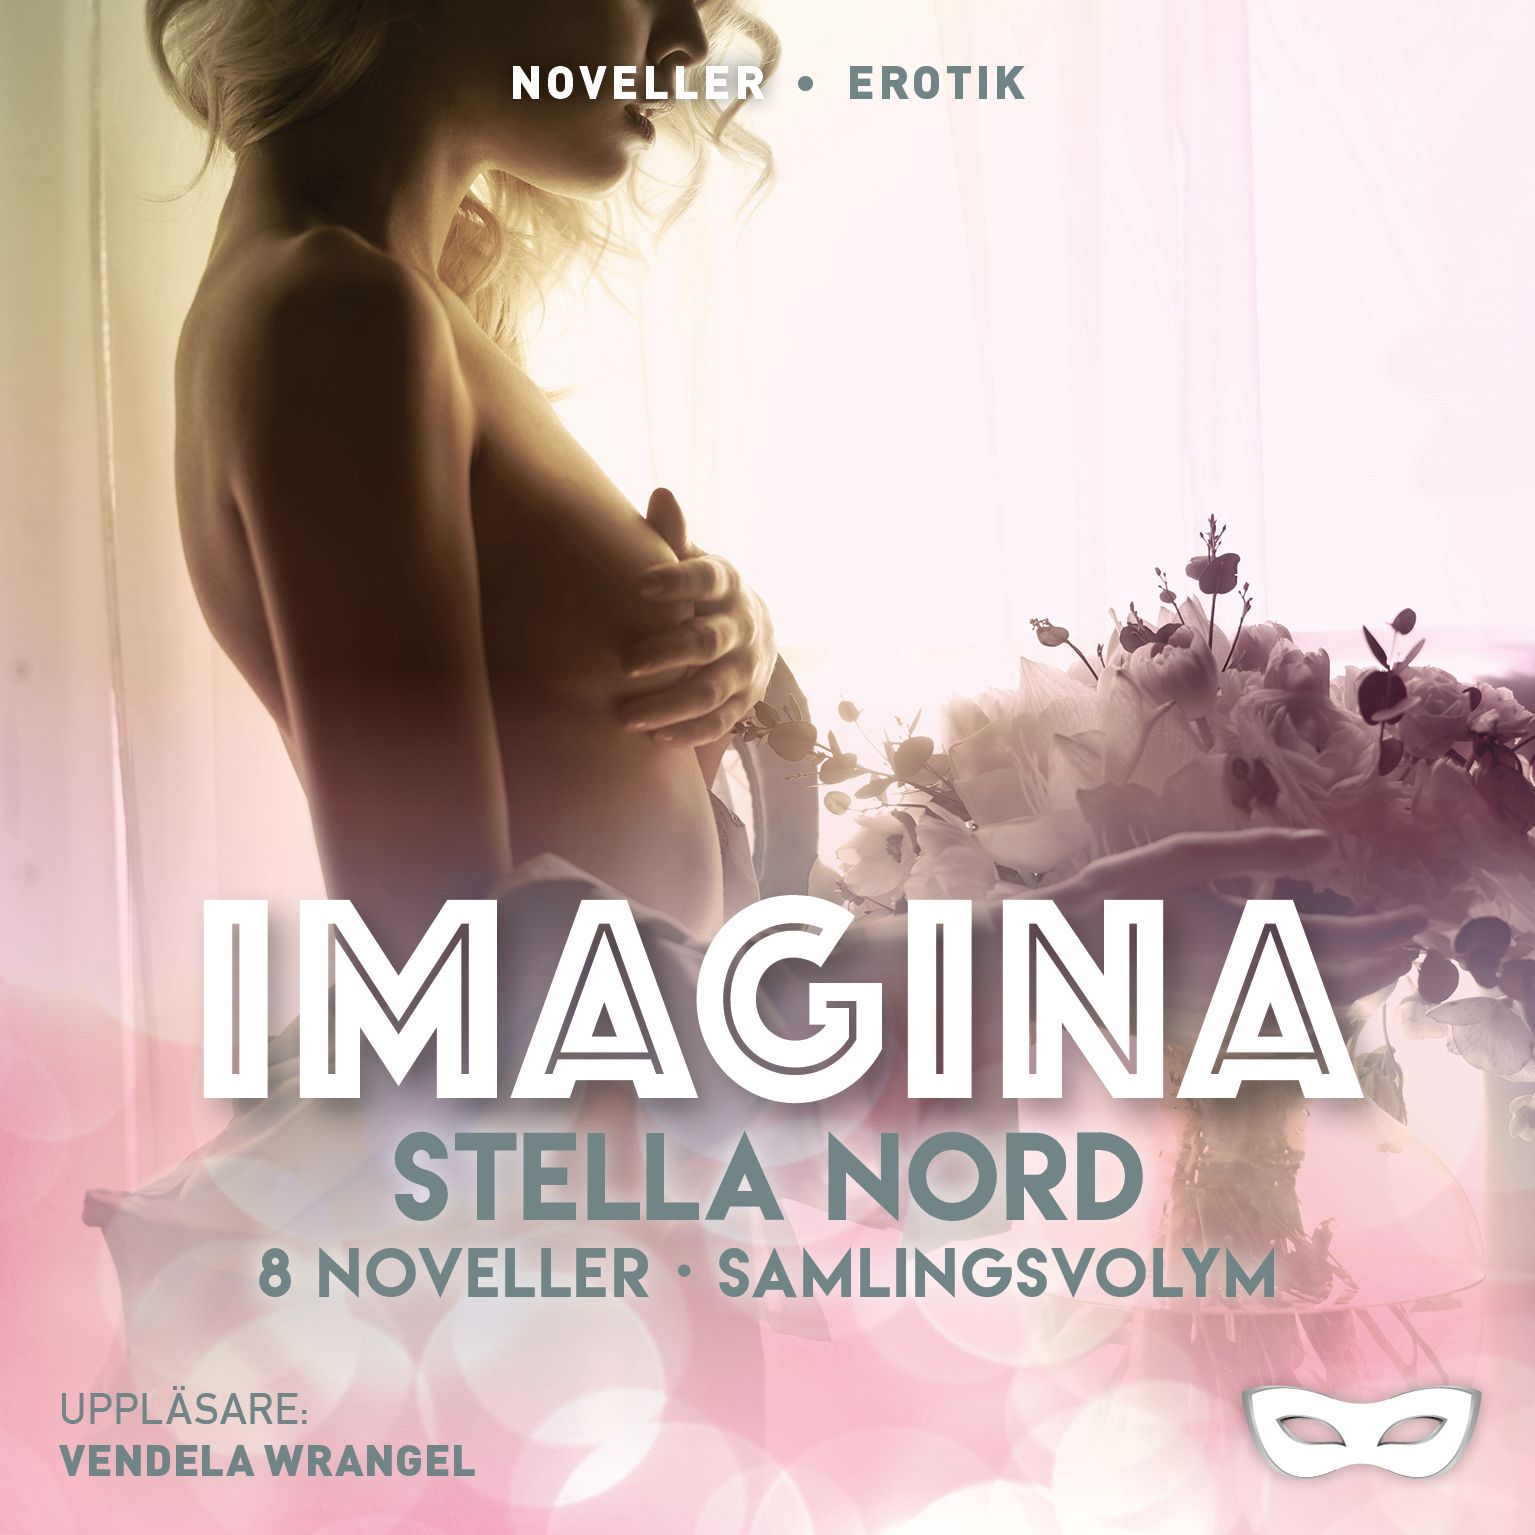 Stella Nord: Imagina 8 noveller Samlingsvolym, audiobook by Stella Nord